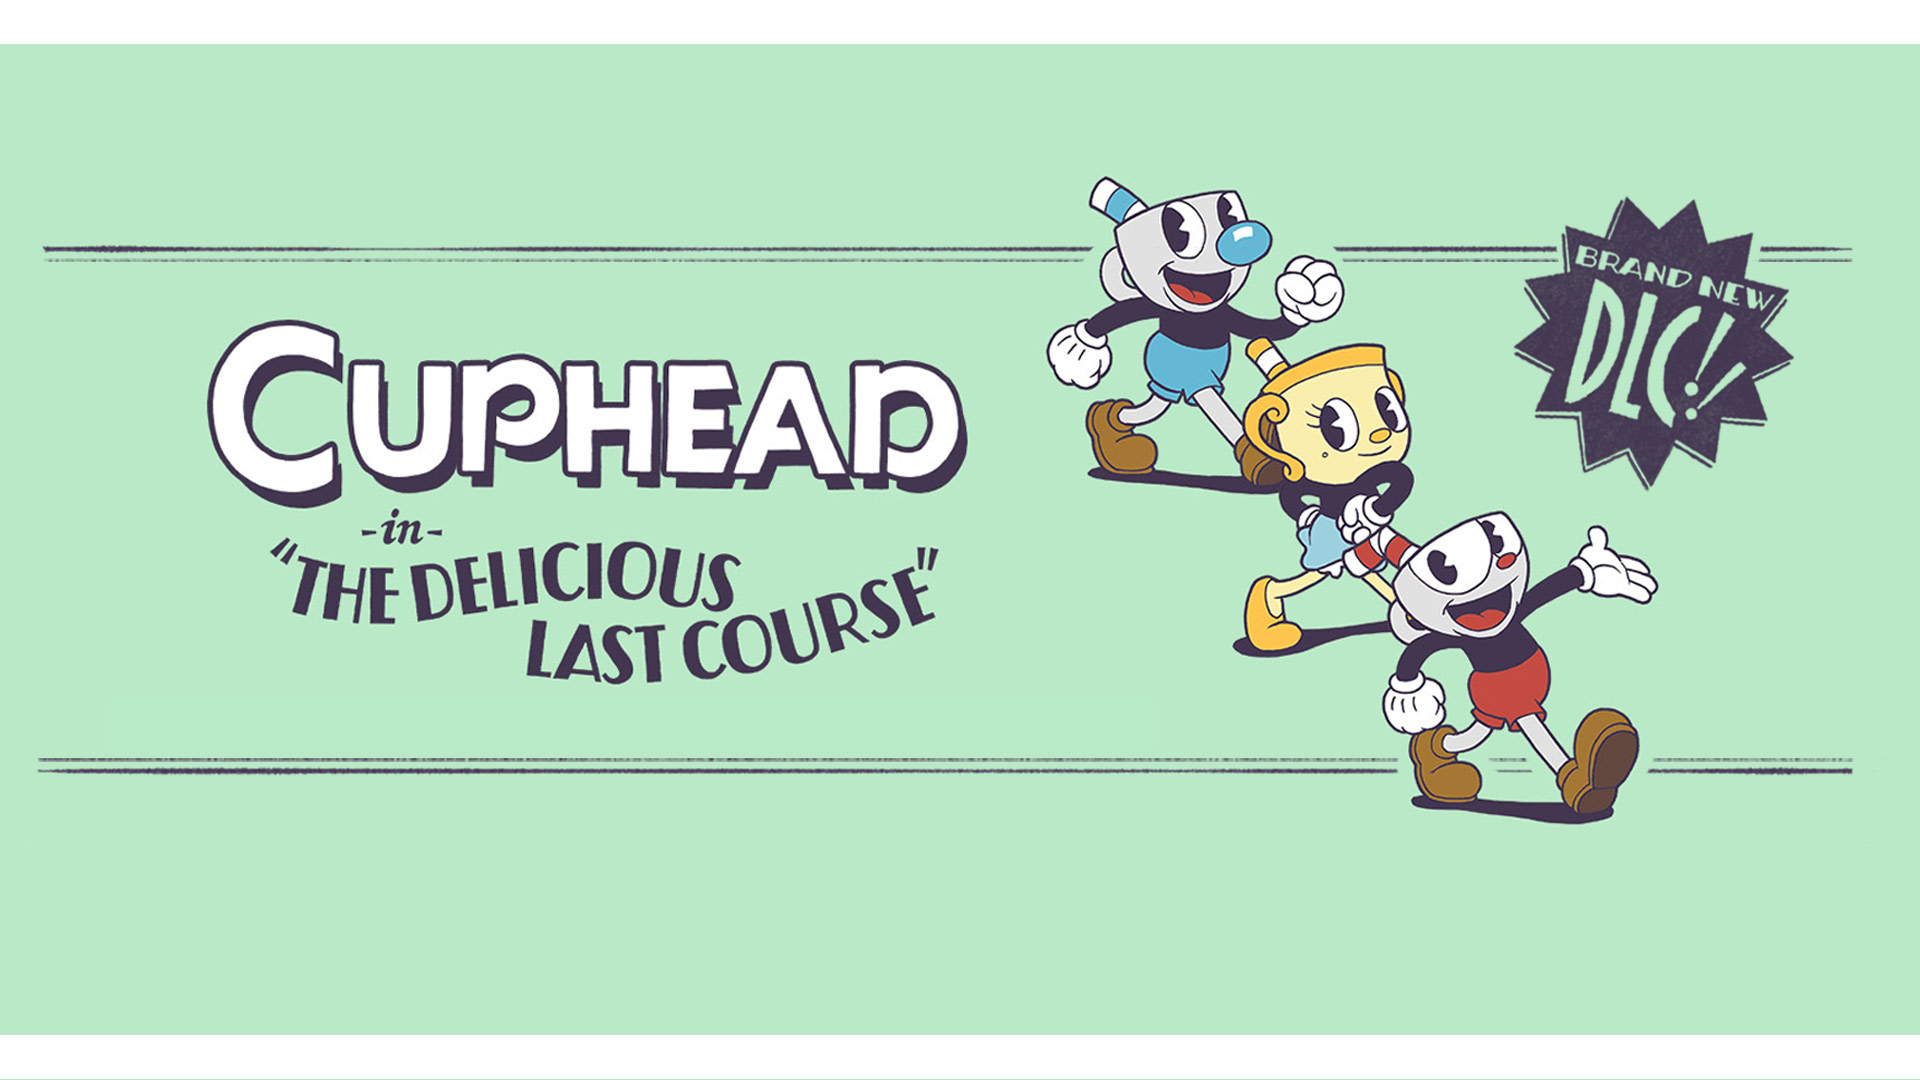 Cuphead in The delicious last course, Brand new DLC!, 3 Cuphead karakteri poz veriyor